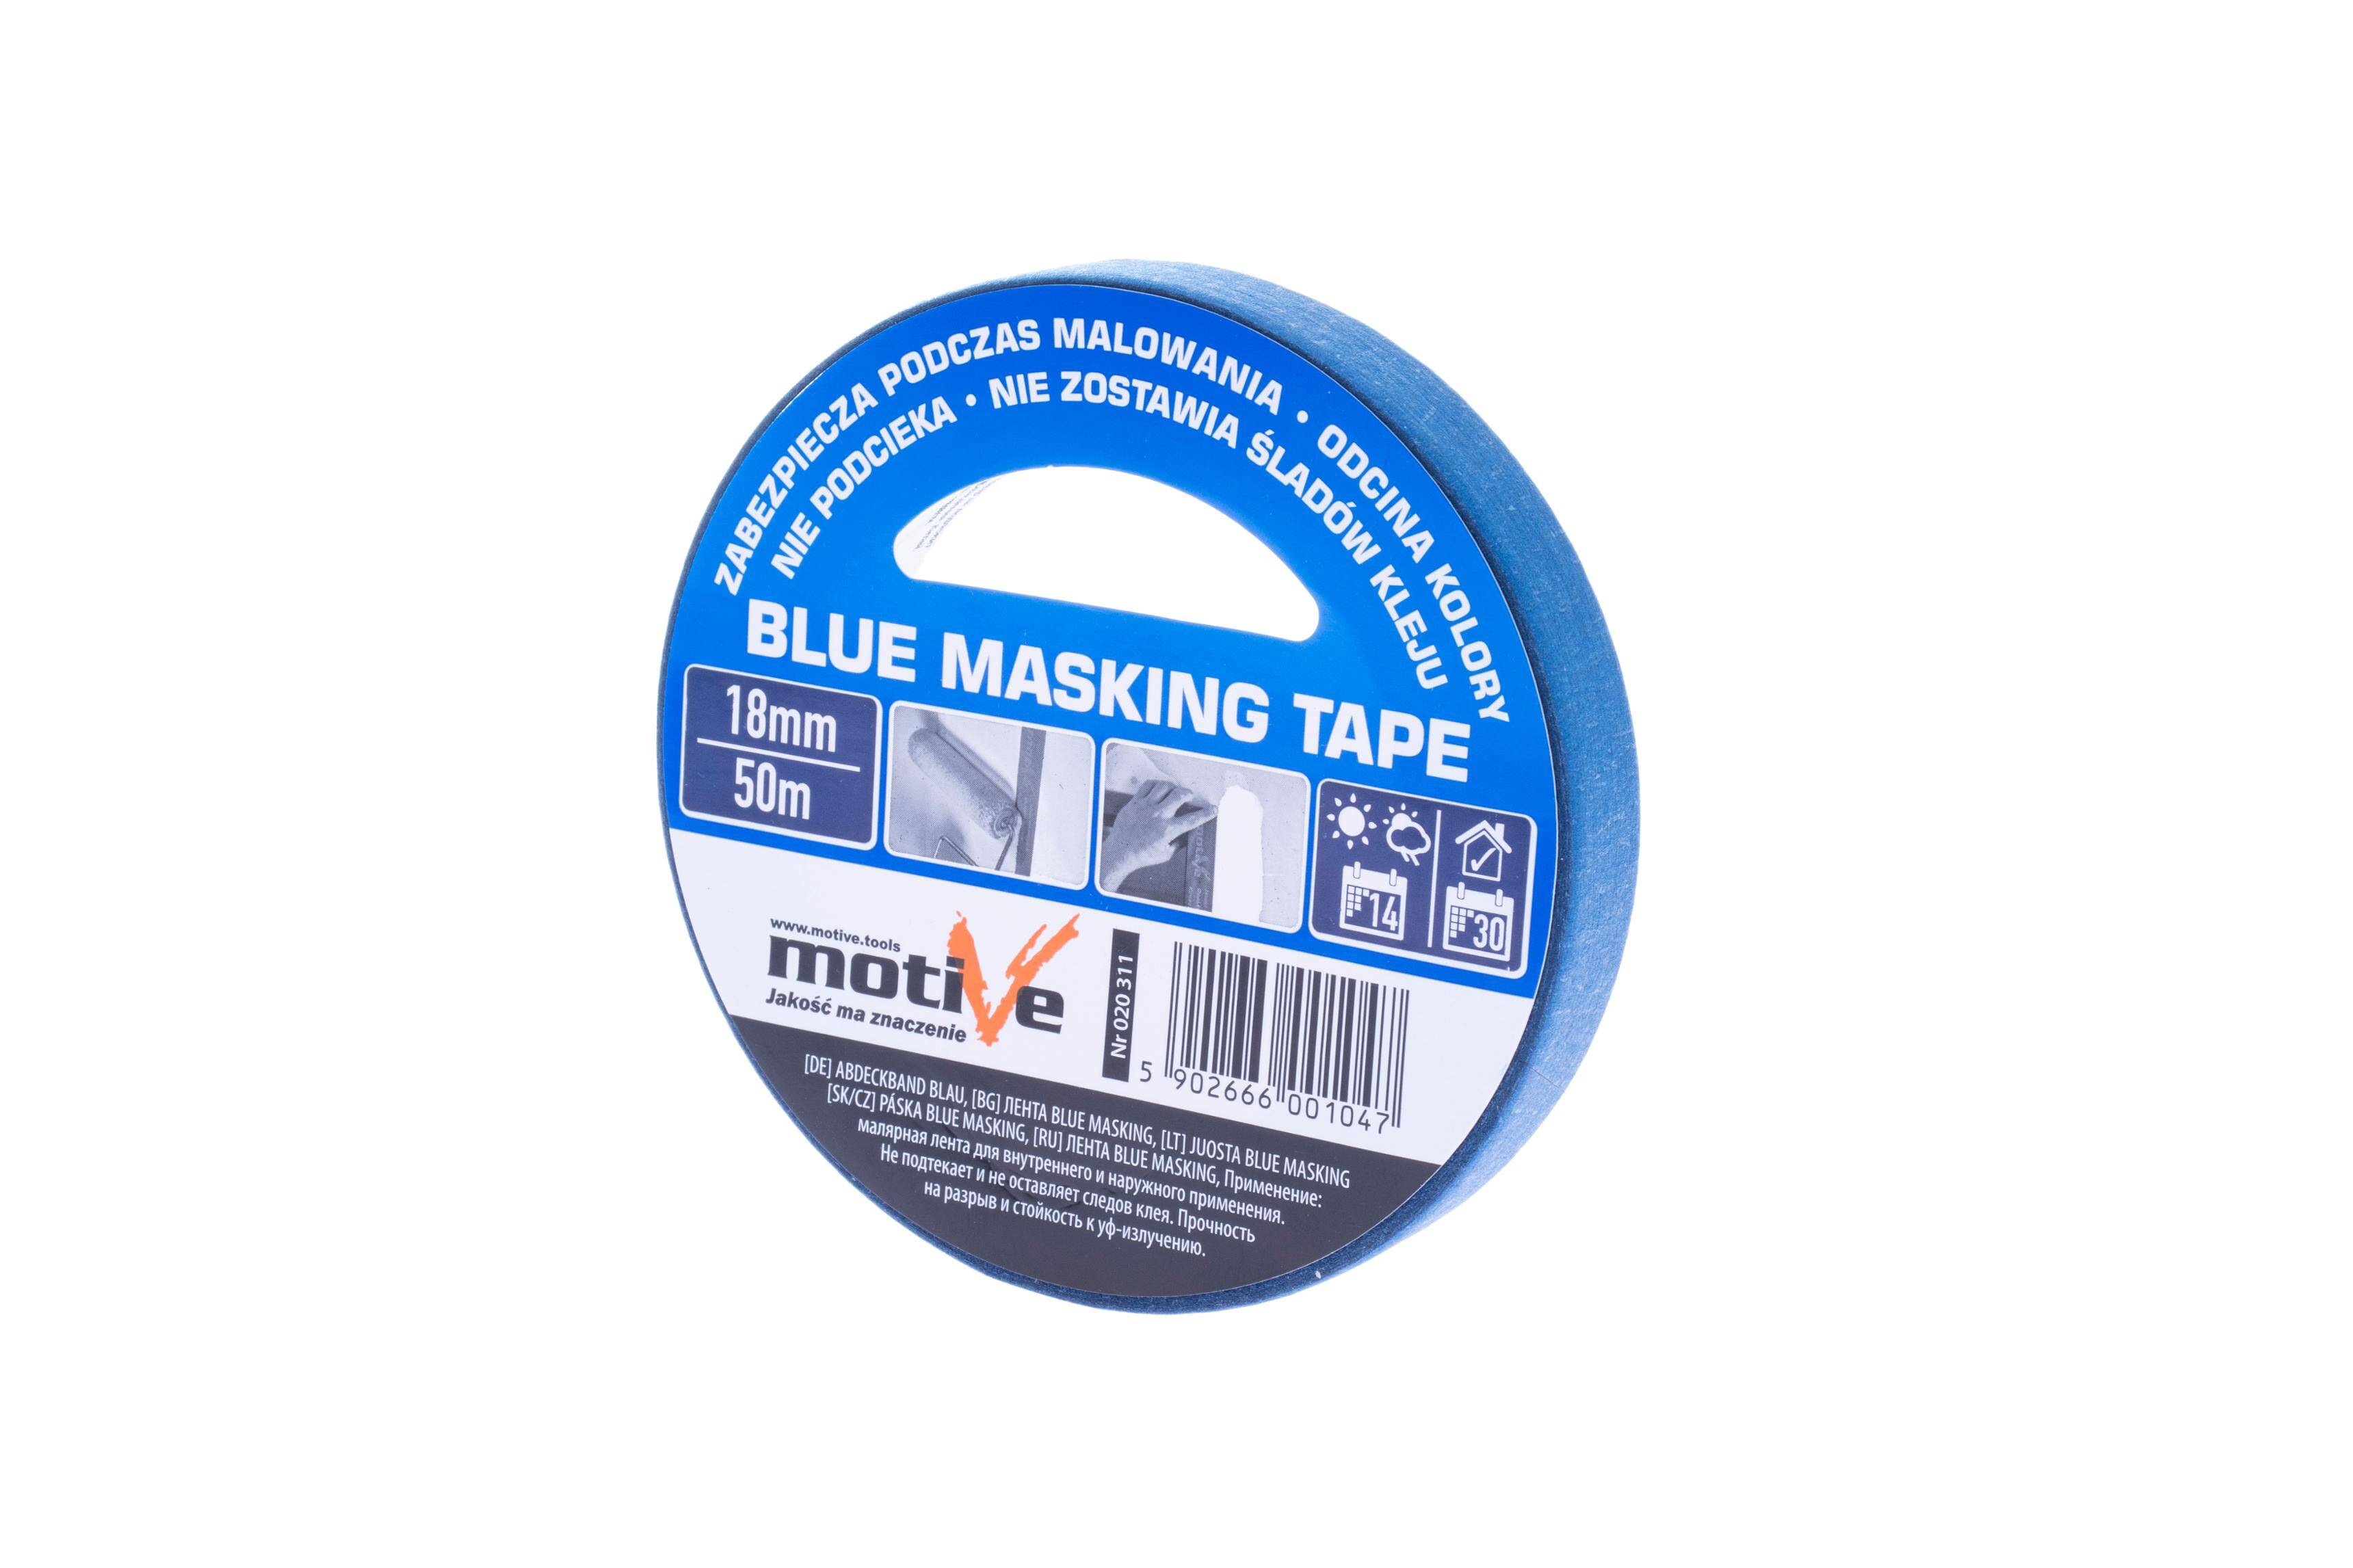 BLUE MASKING TAPE 18mm/50m MOTIVE